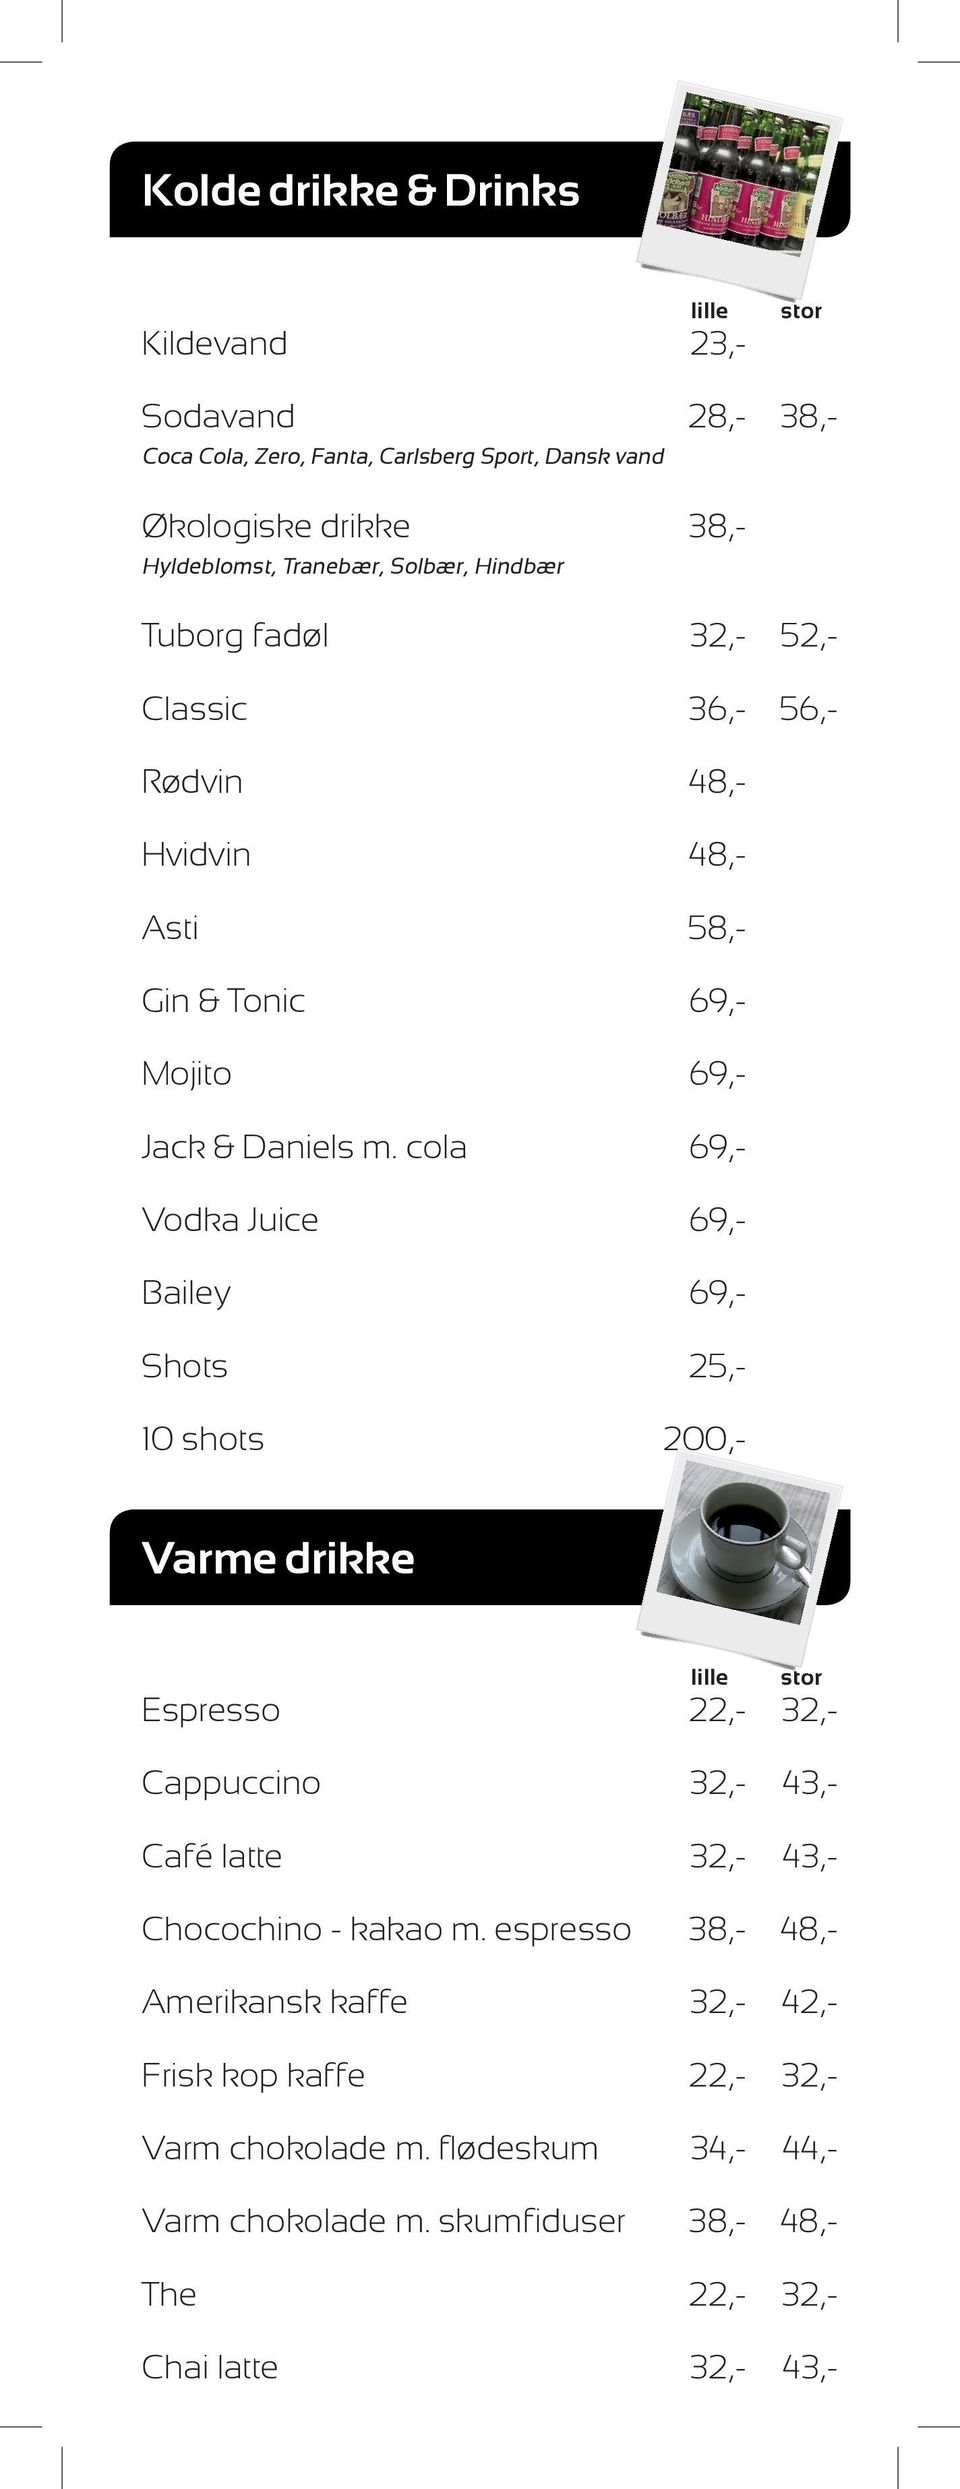 cola 69,- Vodka Juice 69,- Bailey 69,- Shots 25,- 10 shots 200,- Varme drikke lille stor Espresso 22,- 32,- Cappuccino 32,- 43,- Café latte 32,- 43,- Chocochino -